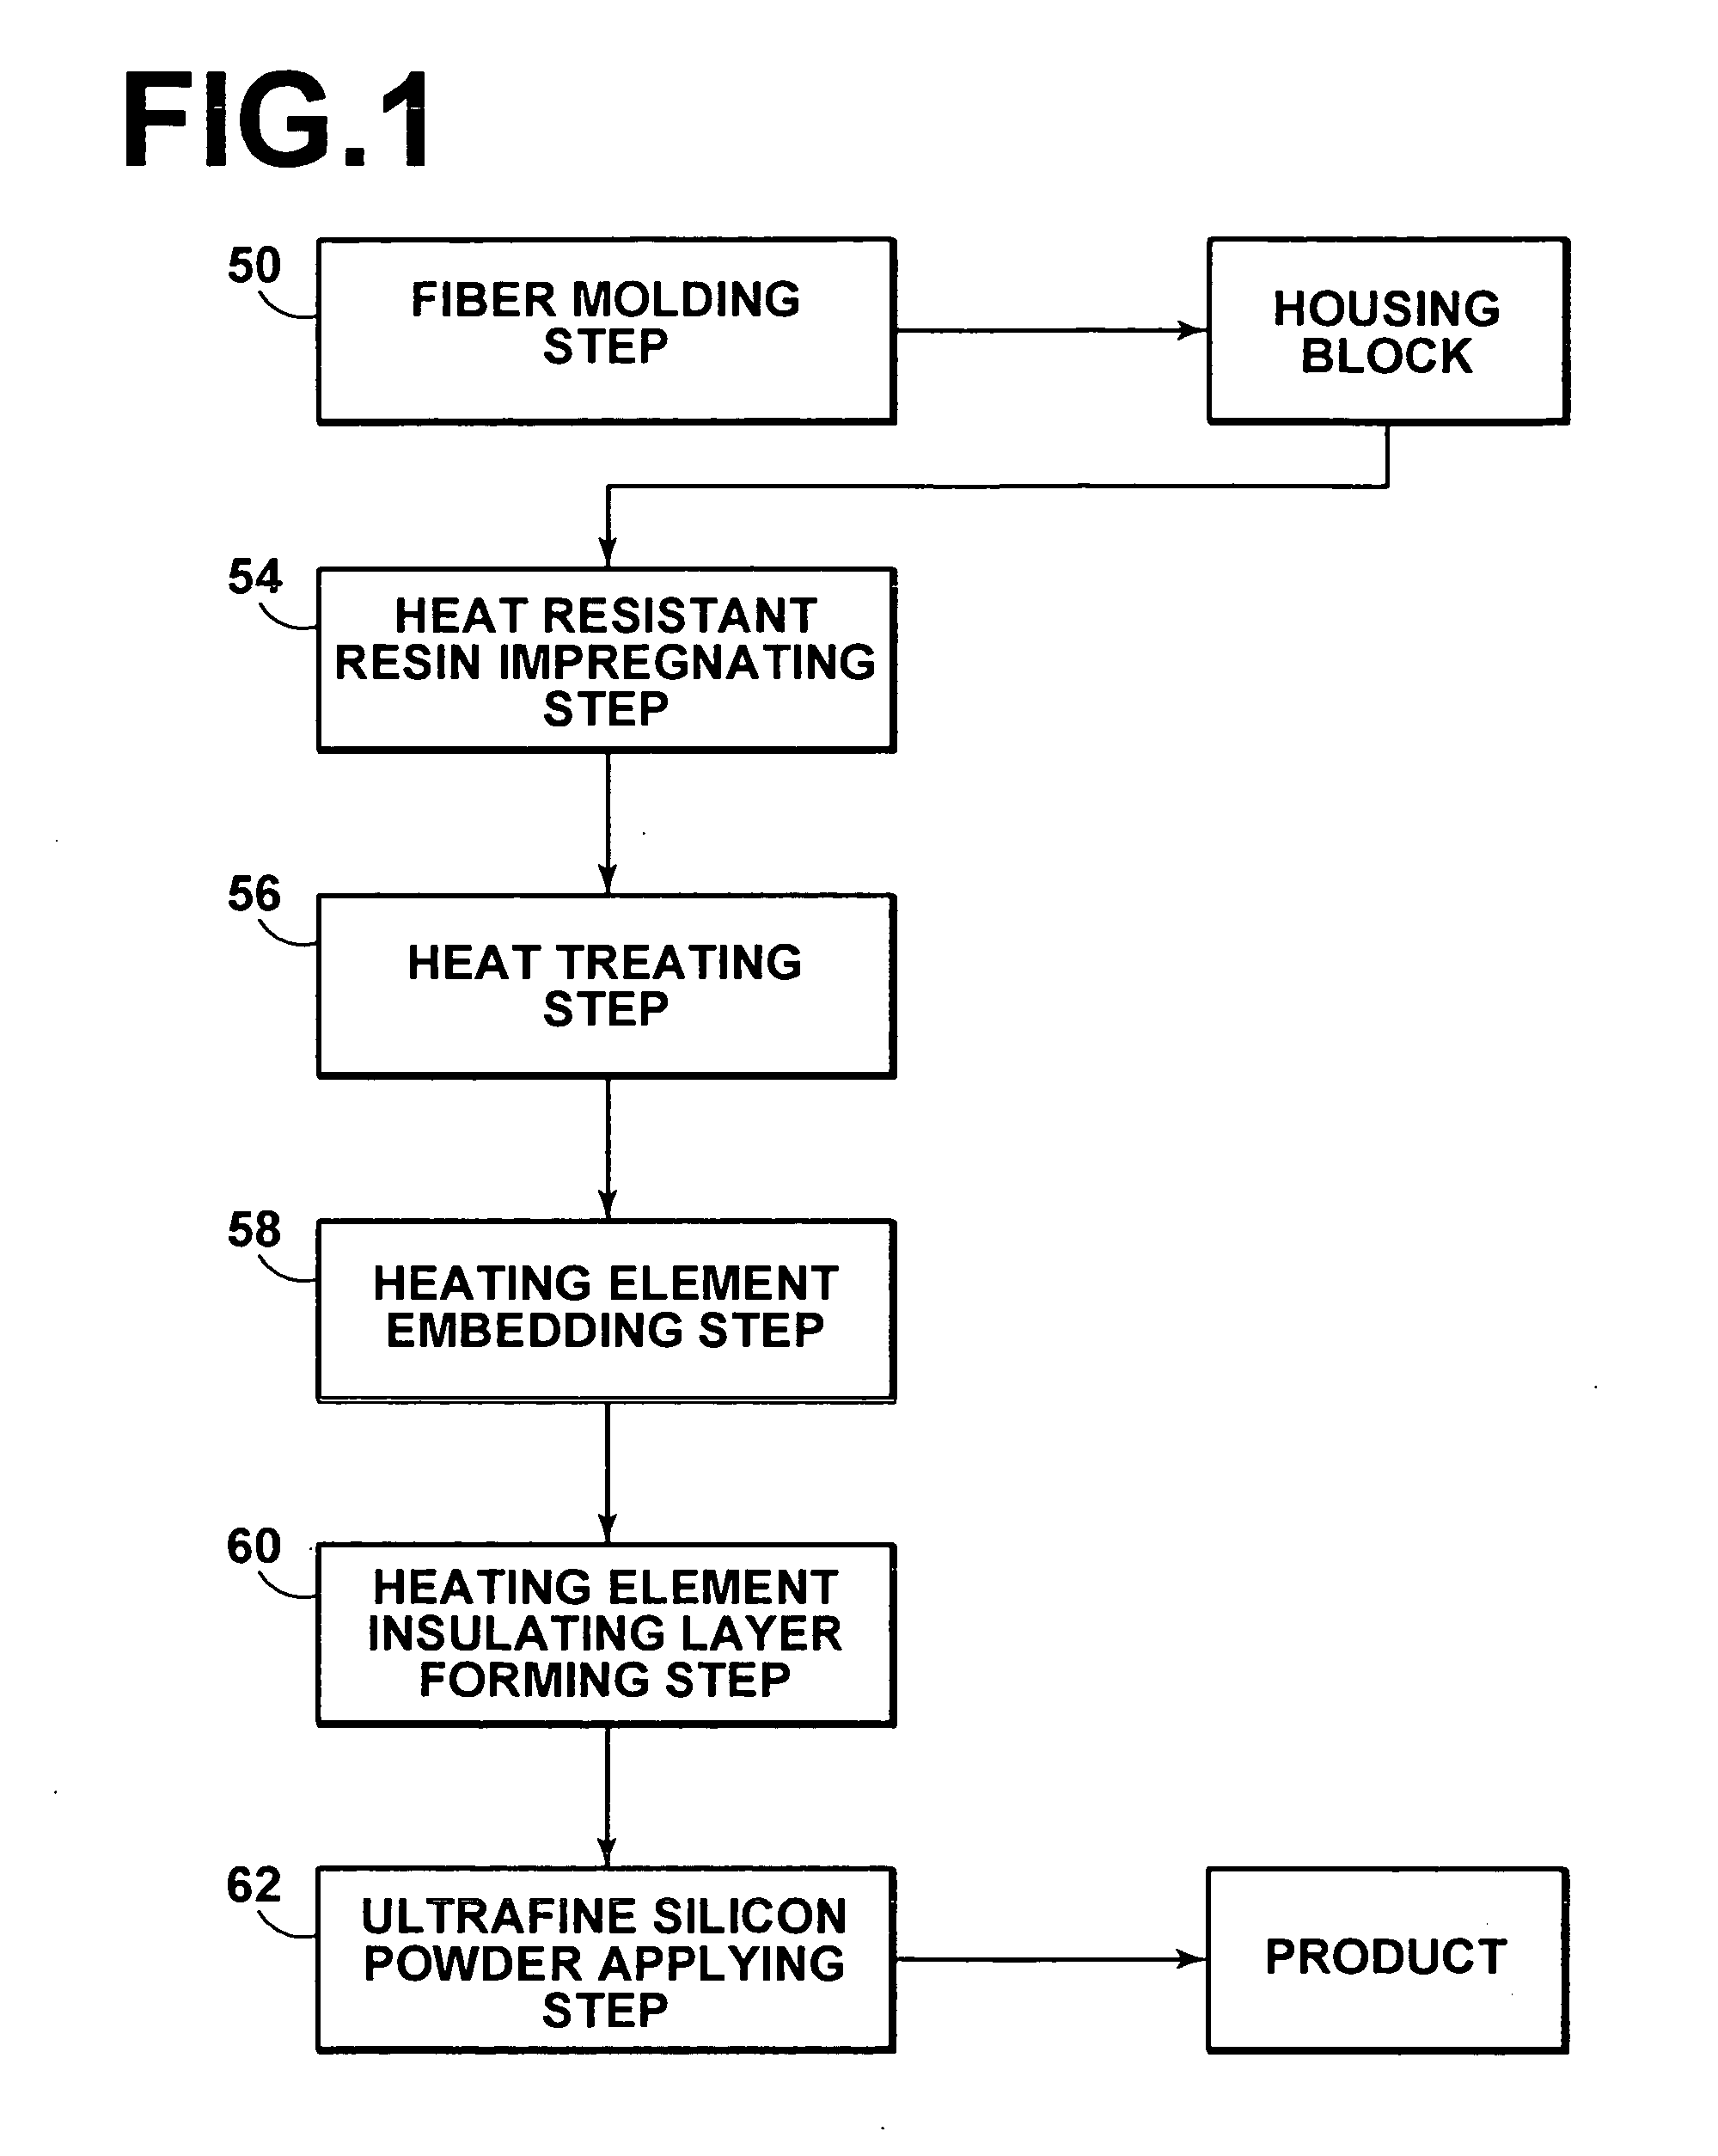 Heater unit manufacturing method